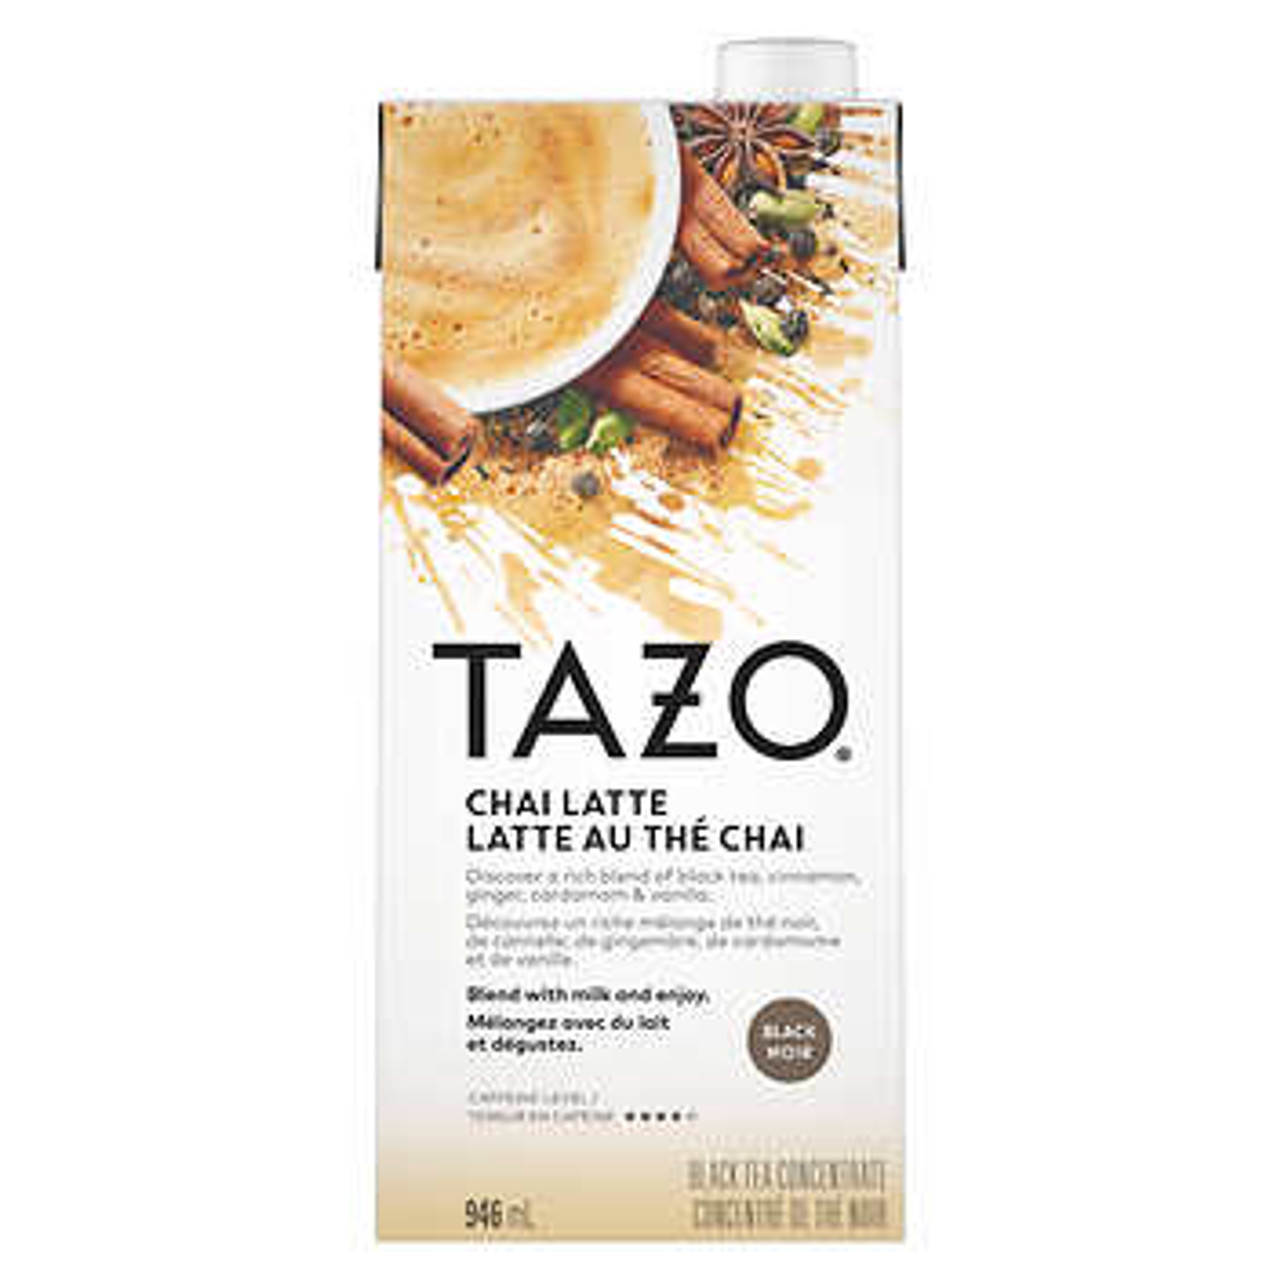 Tazo Chai Latte 1:1 Concentrate 946ml/32 fl oz- 3 Pack